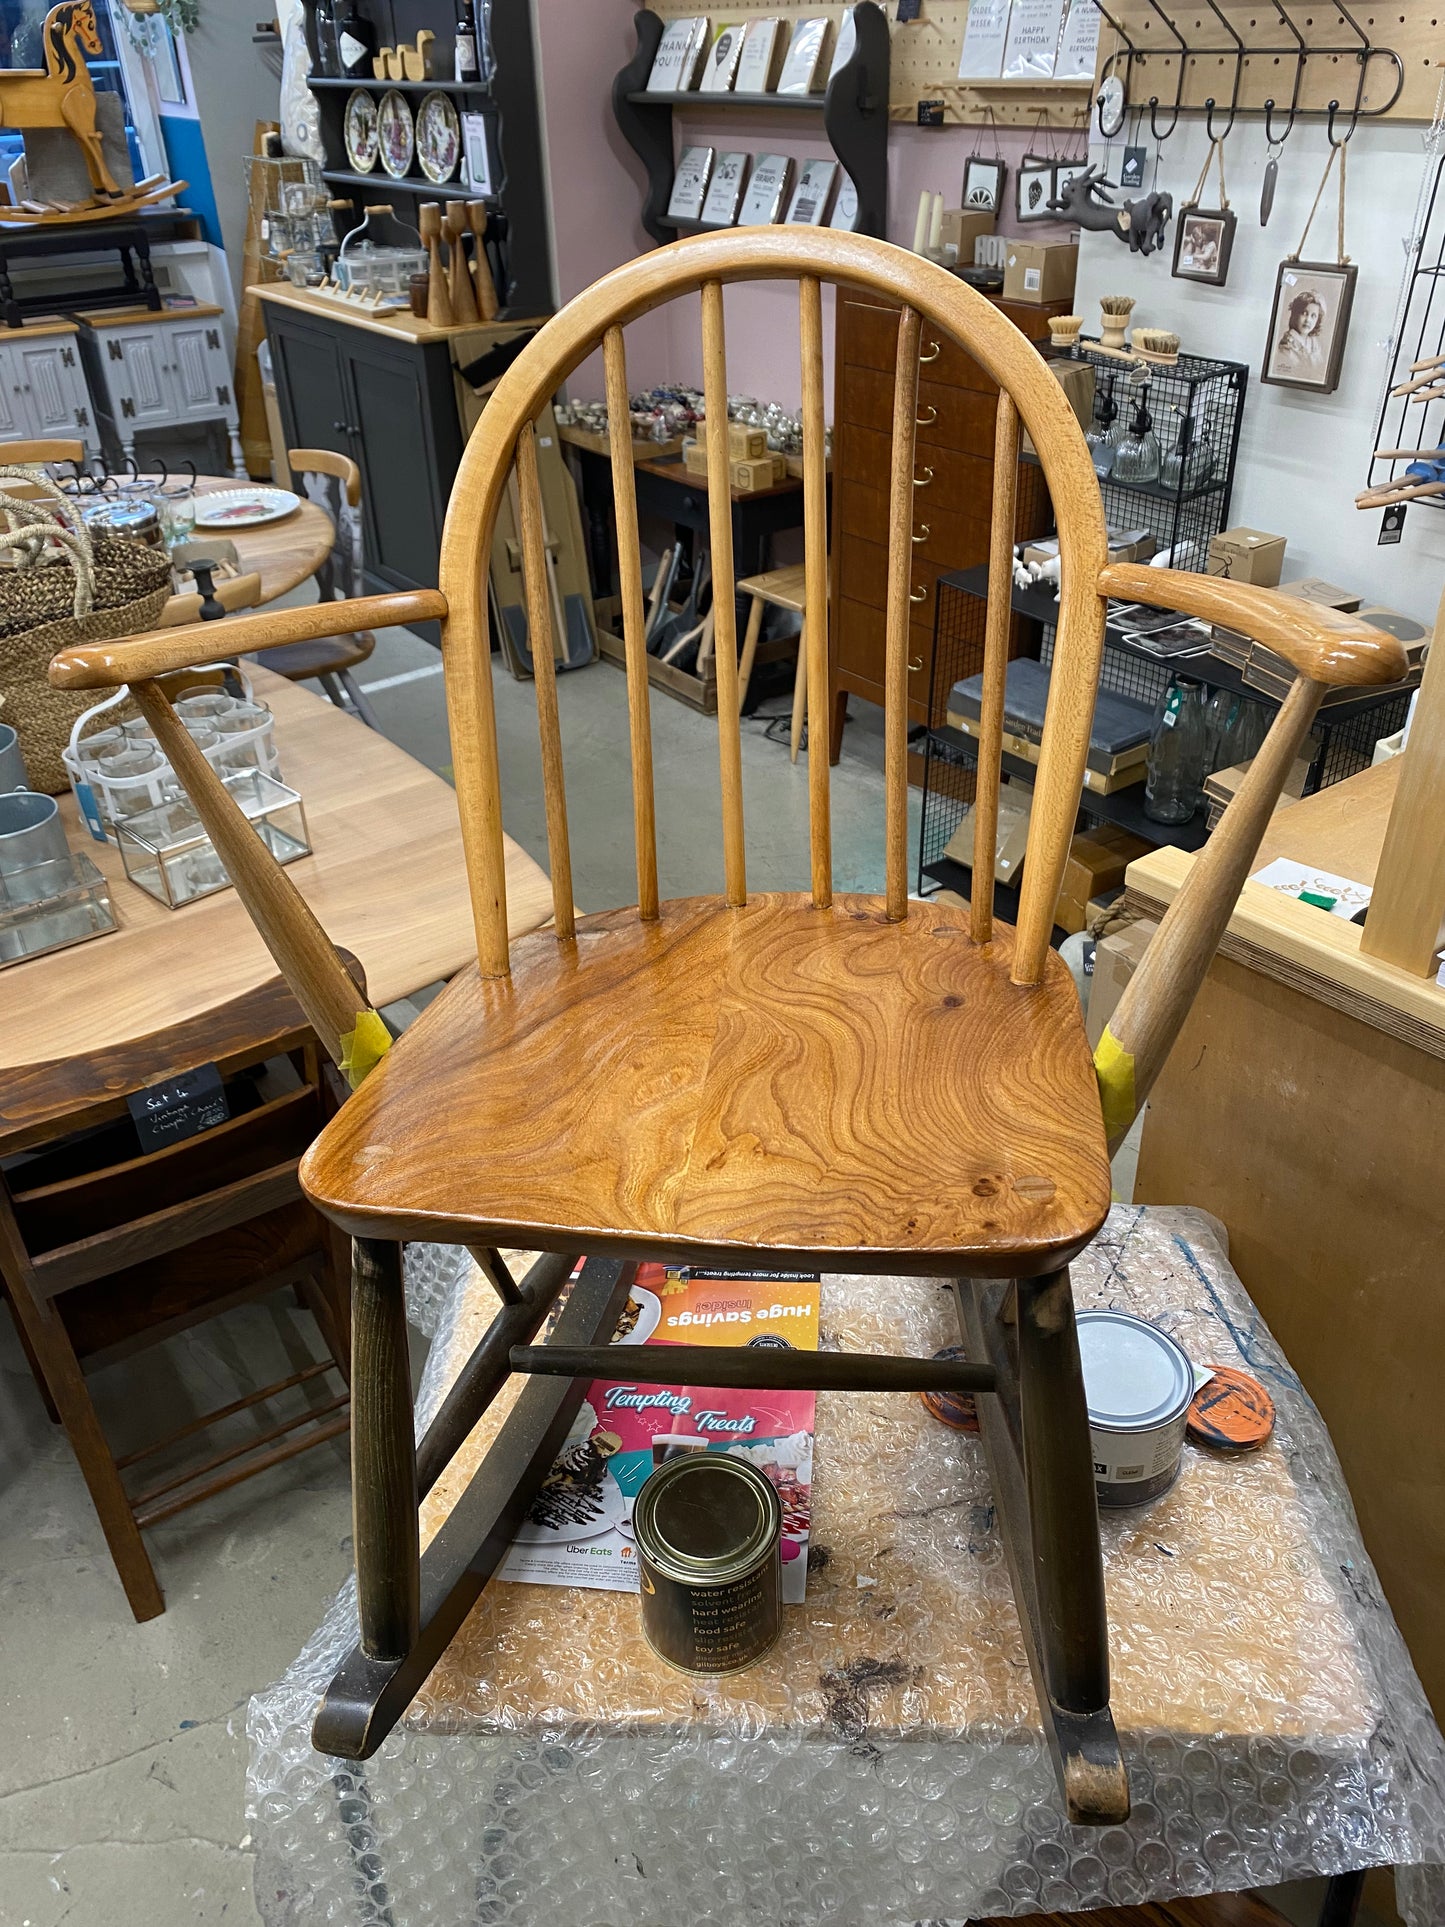 Vintage Ercol Rocking Chair